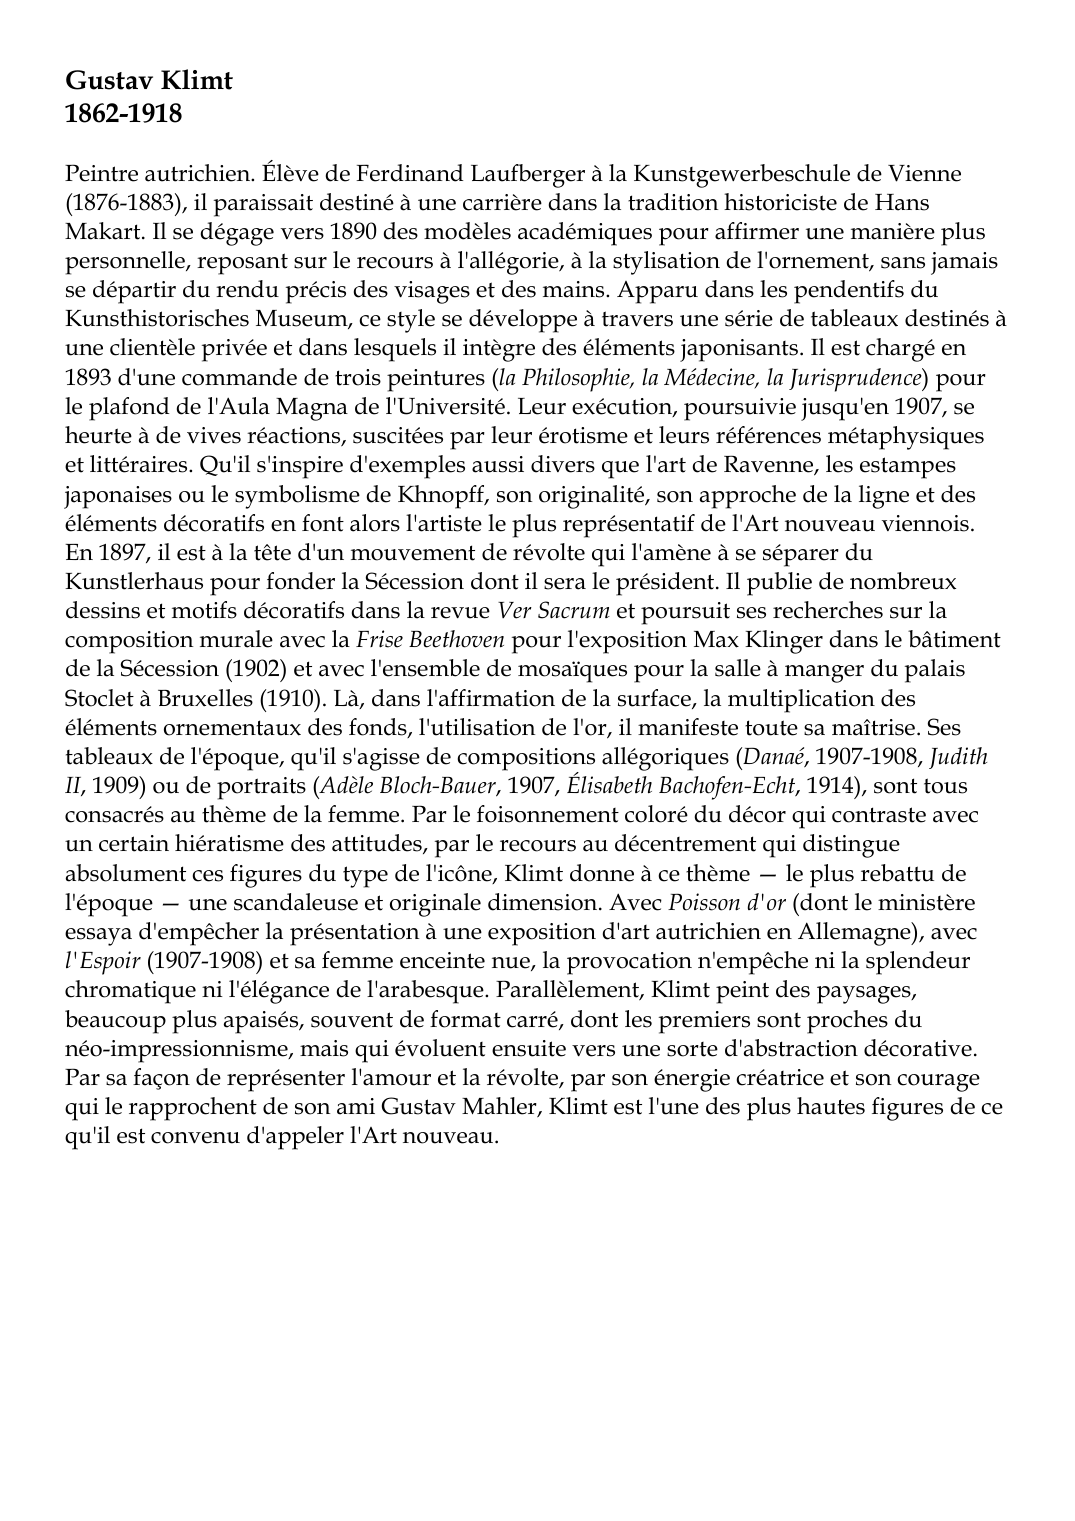 Prévisualisation du document Gustav Klimt1862-1918Peintre autrichien.